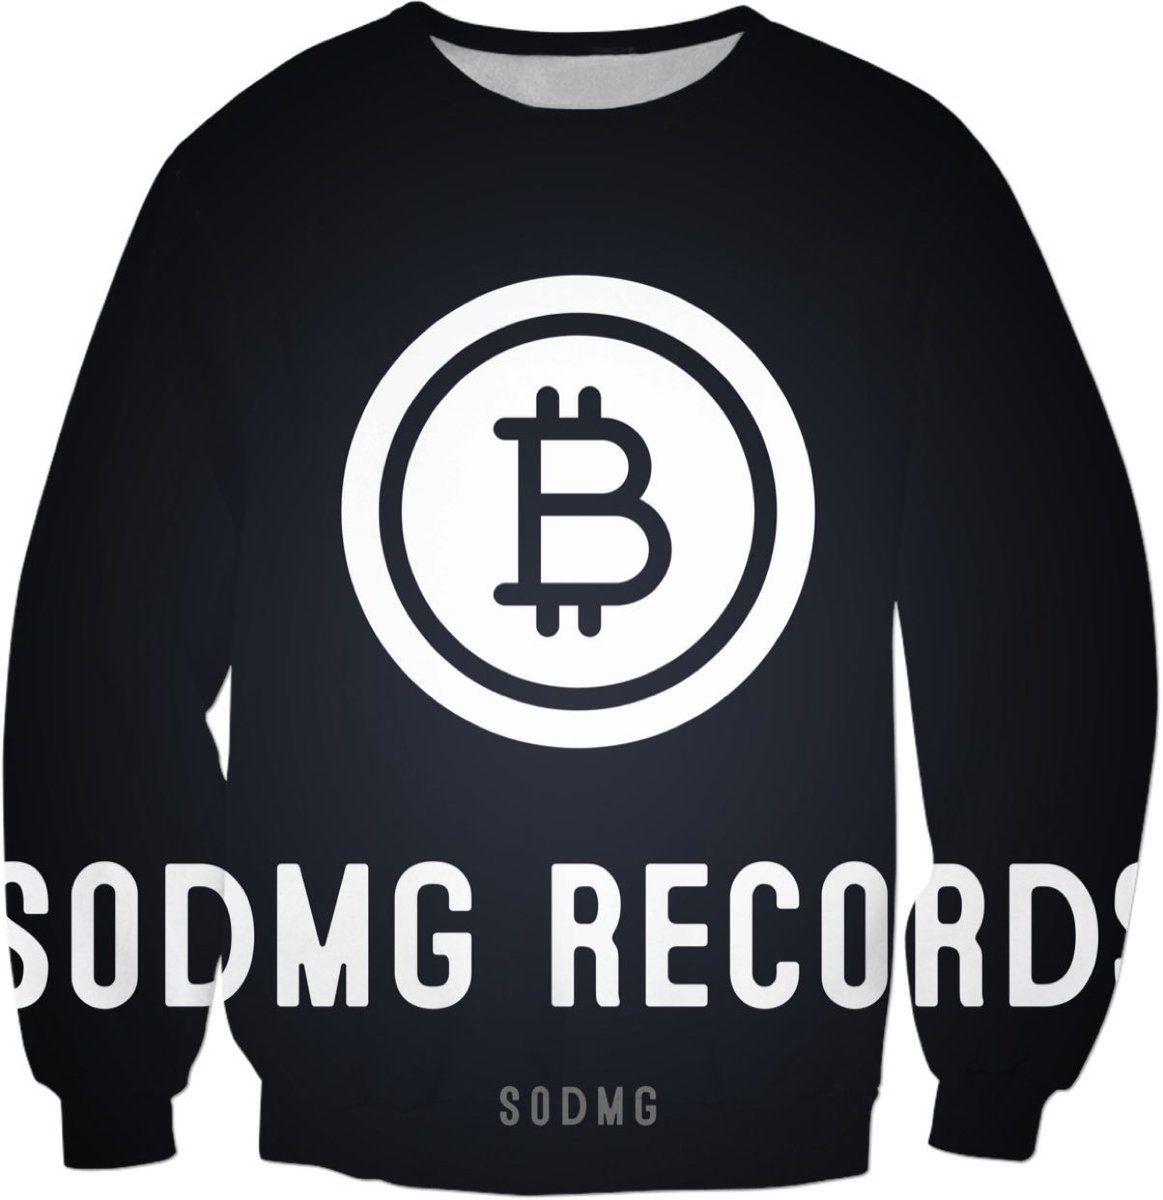 SODMG Logo - Soulja Boy (Drako) on Twitter: 